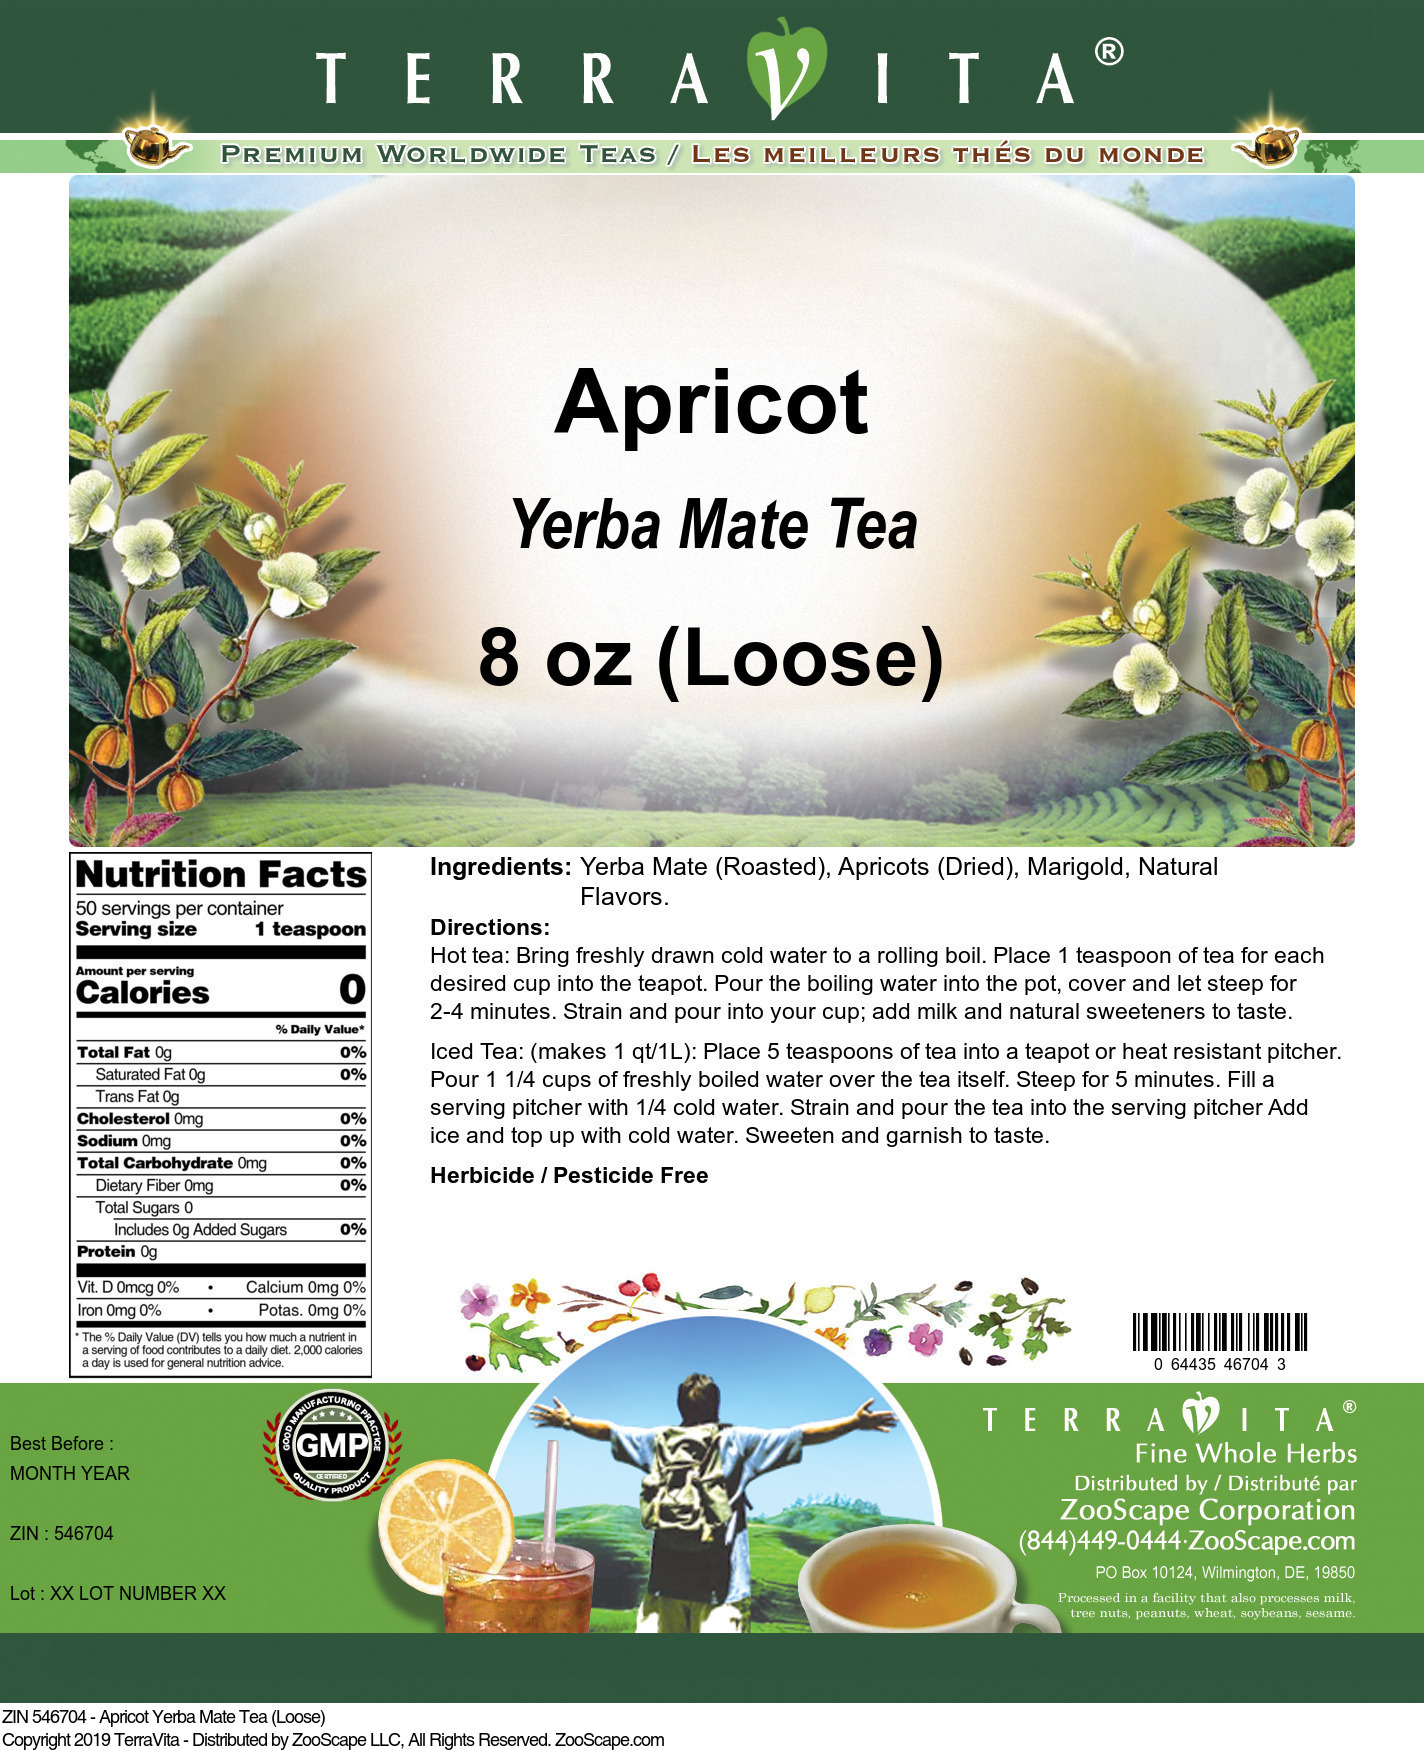 Apricot Yerba Mate Tea (Loose) - Label